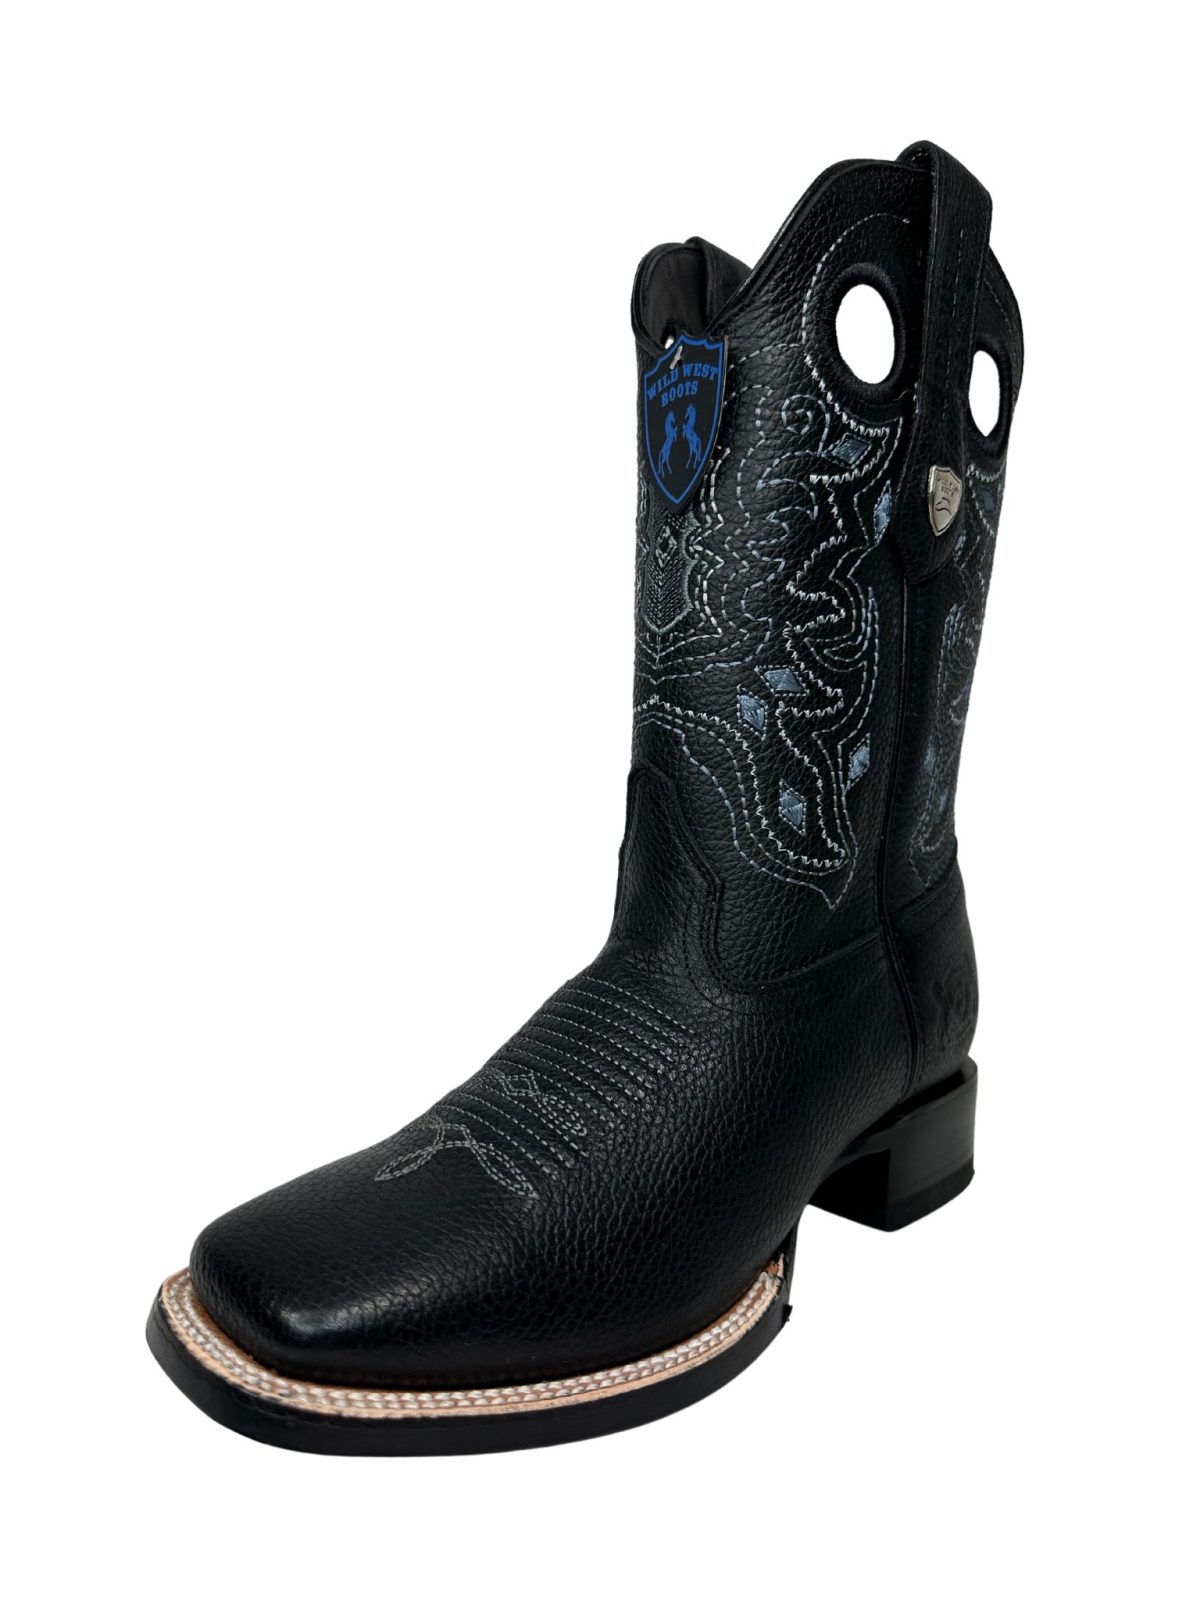 Wild West Men’s Square Toe Black Leather Boot